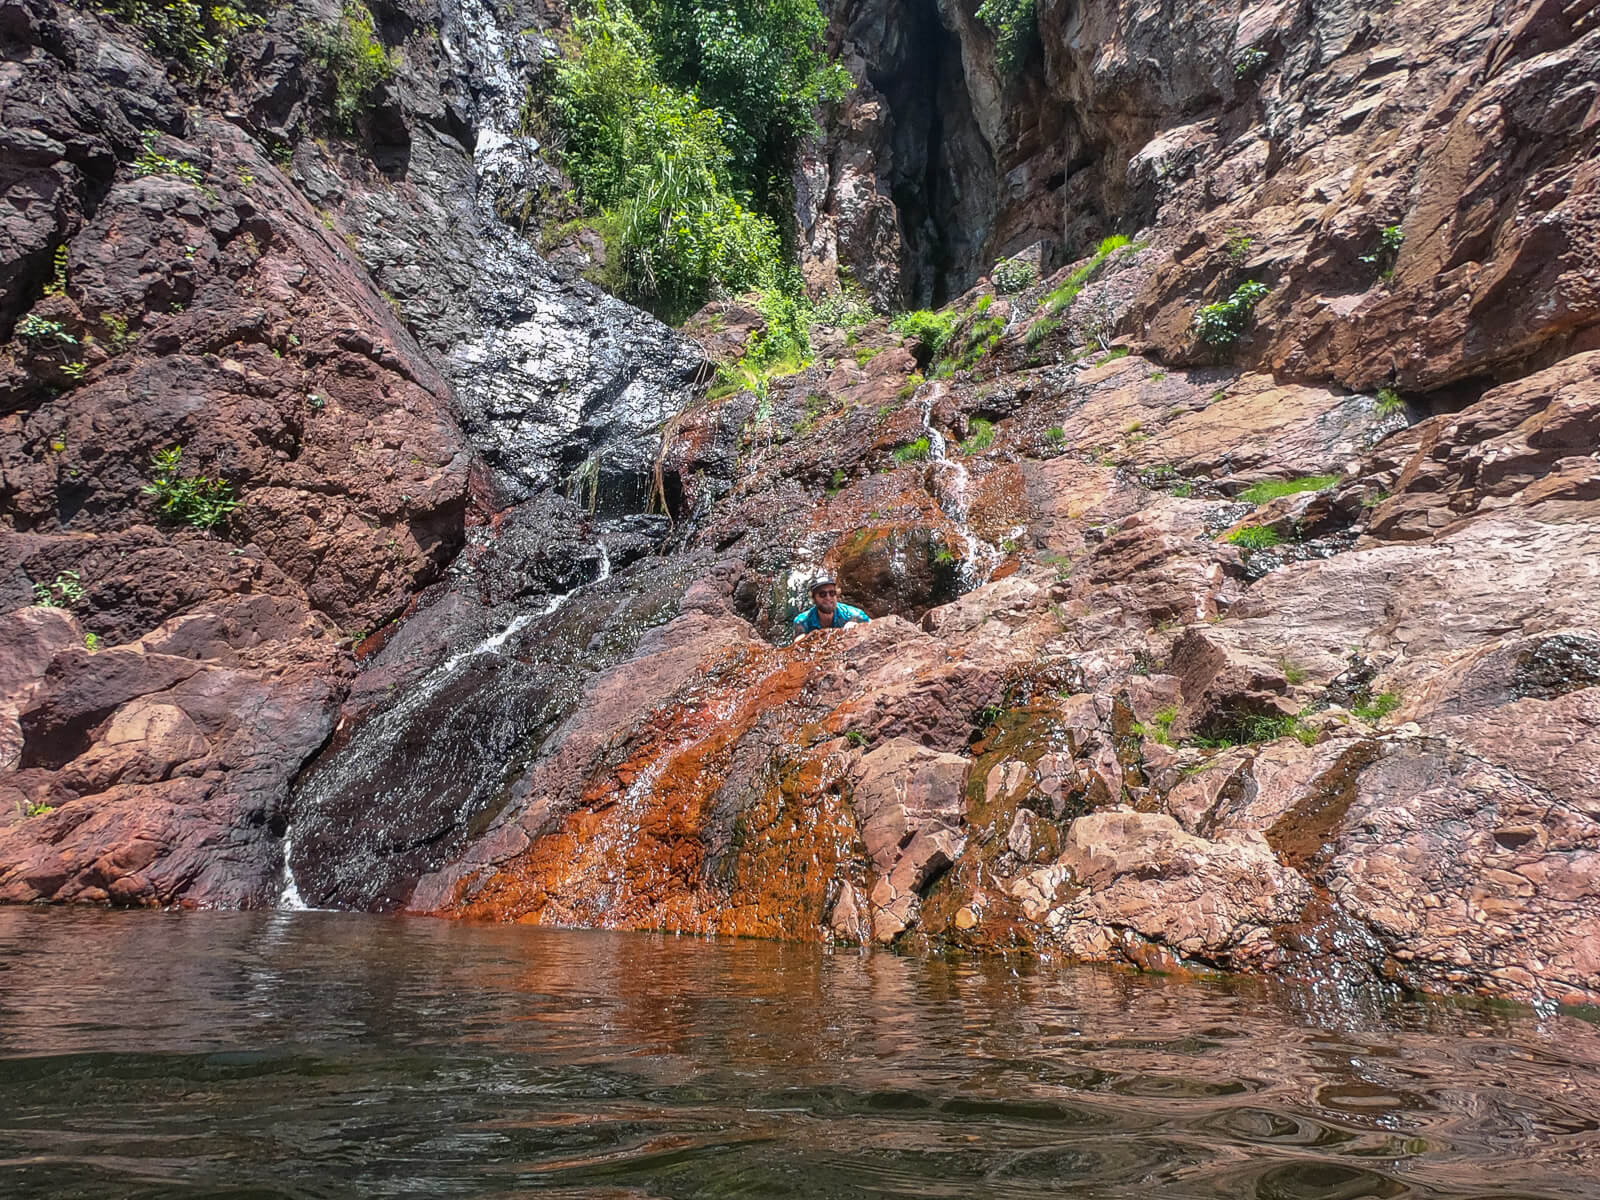 Wangi Falls has a hidden rockpool 